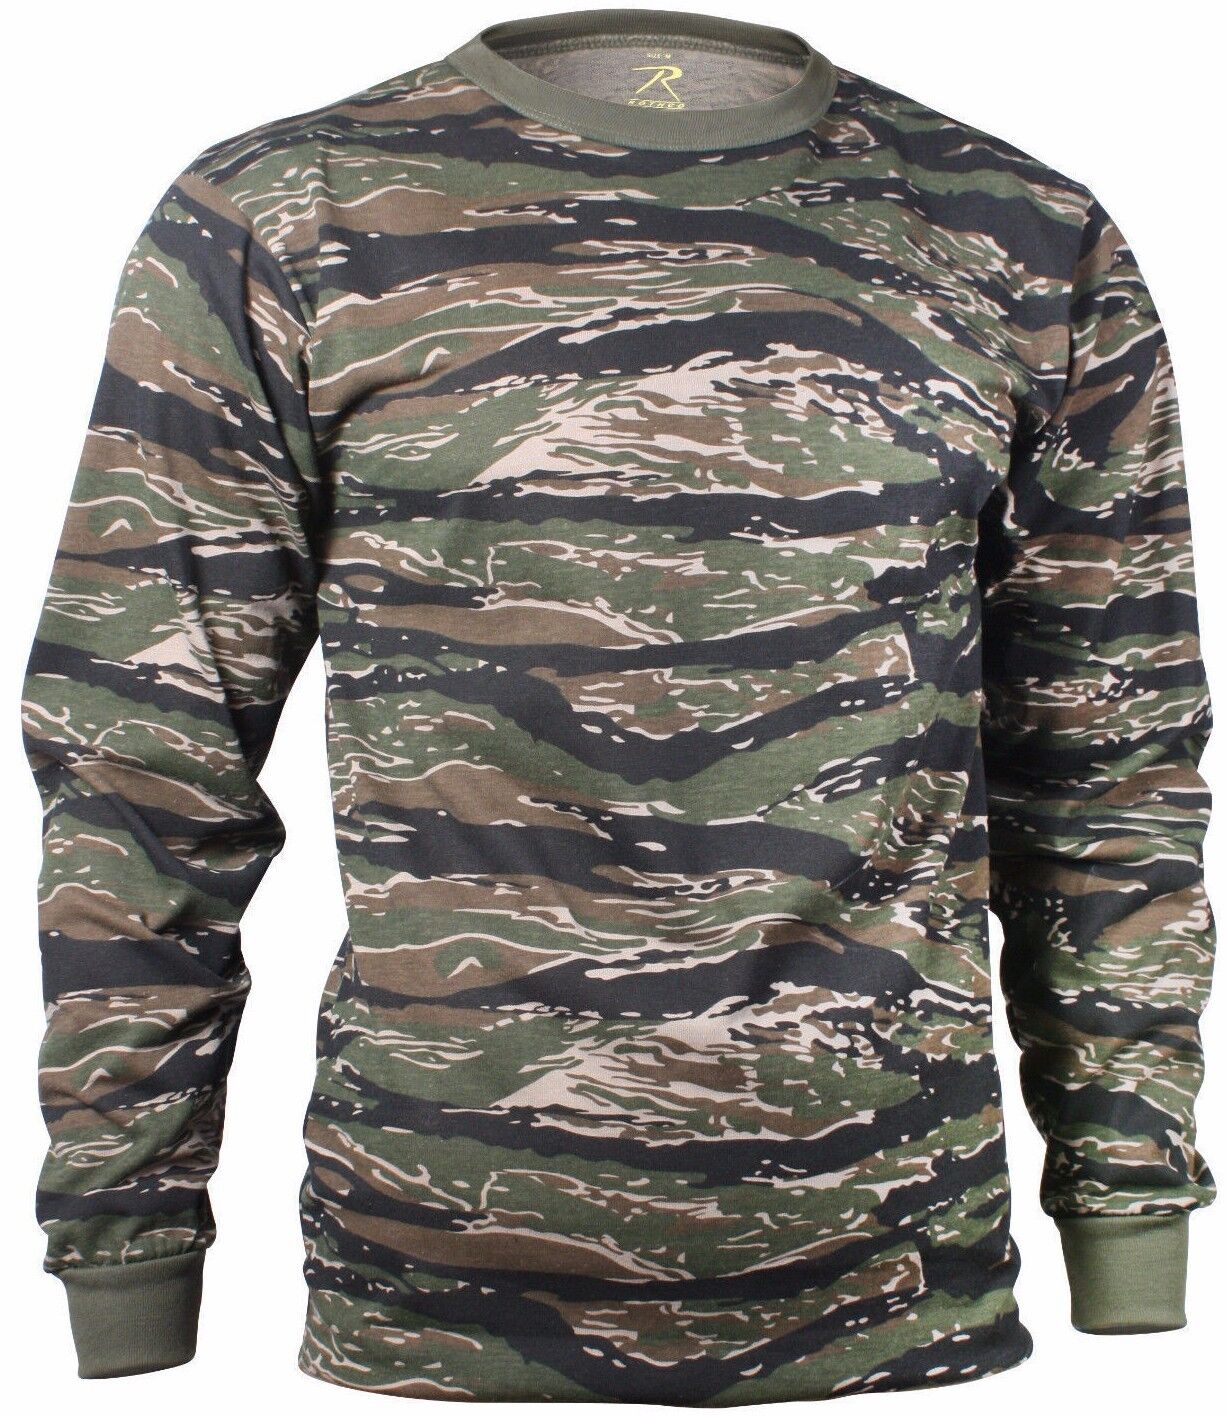 Rothco Military Tactical Long Sleeve Camo T-Shirt (Choose Sizes)